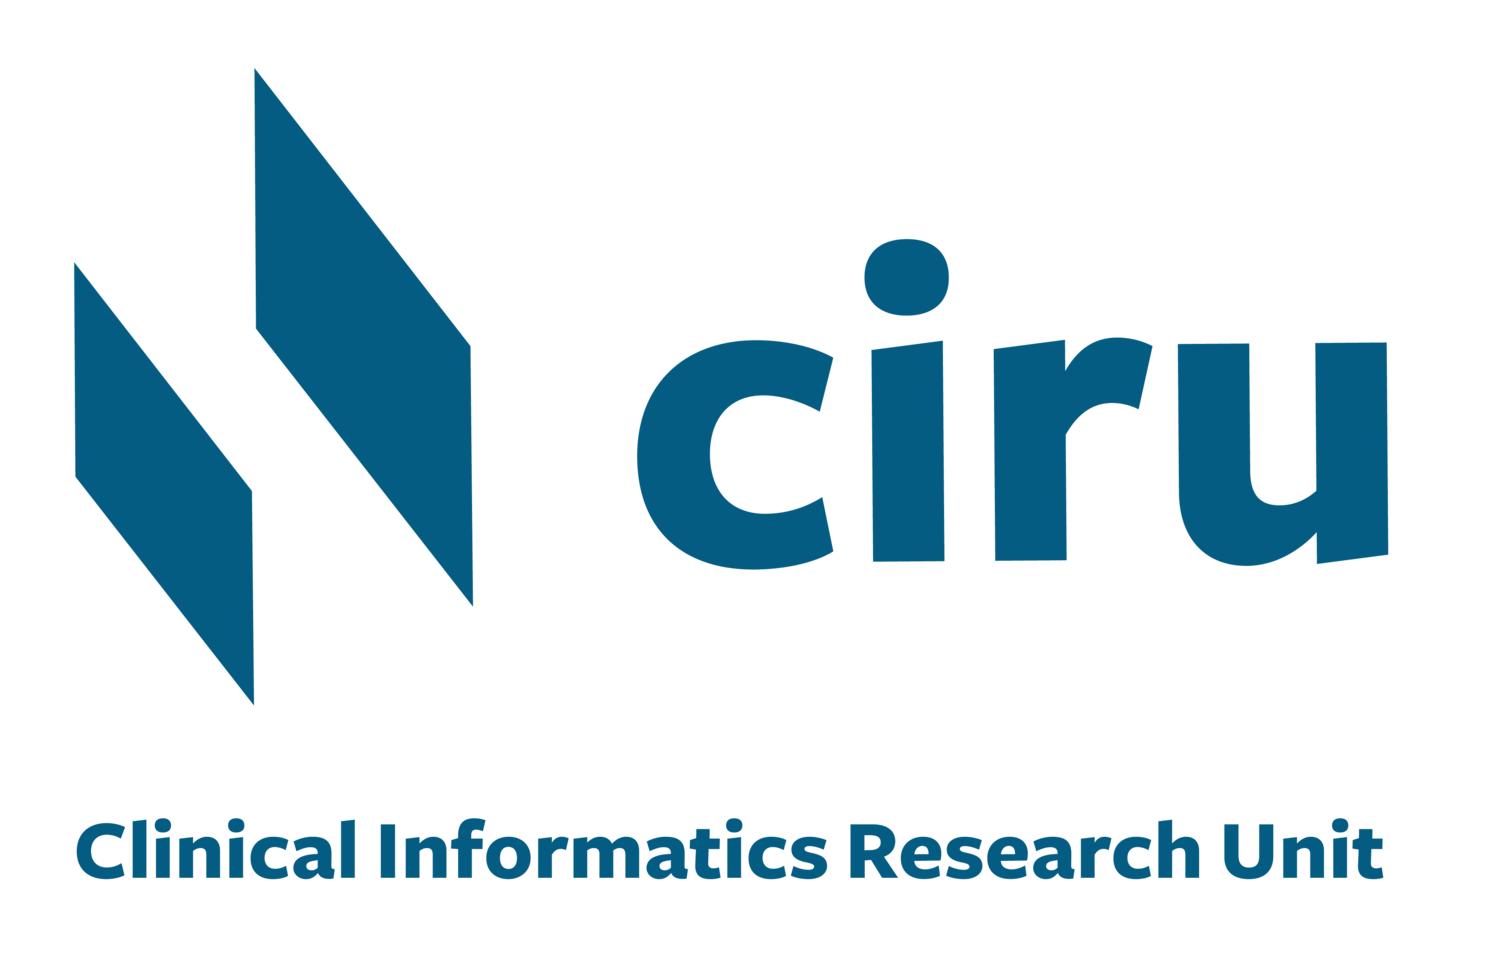 Clinical Informatics Research Unit